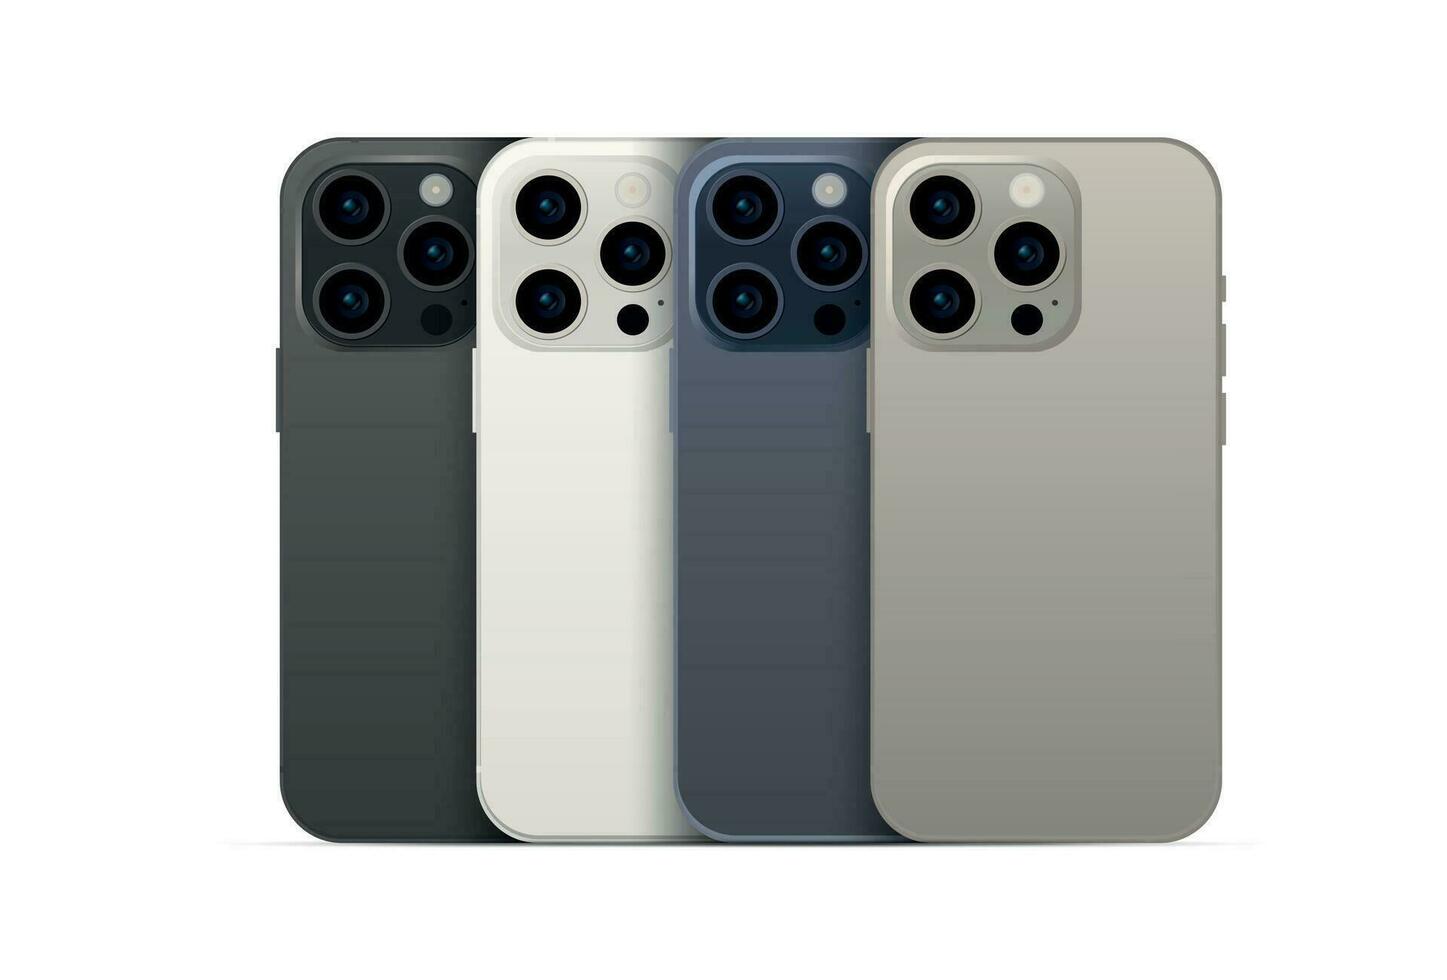 New smartphone 15 PRO, modern smartphone gadget, set of 4 pieces in new original colors - Vector